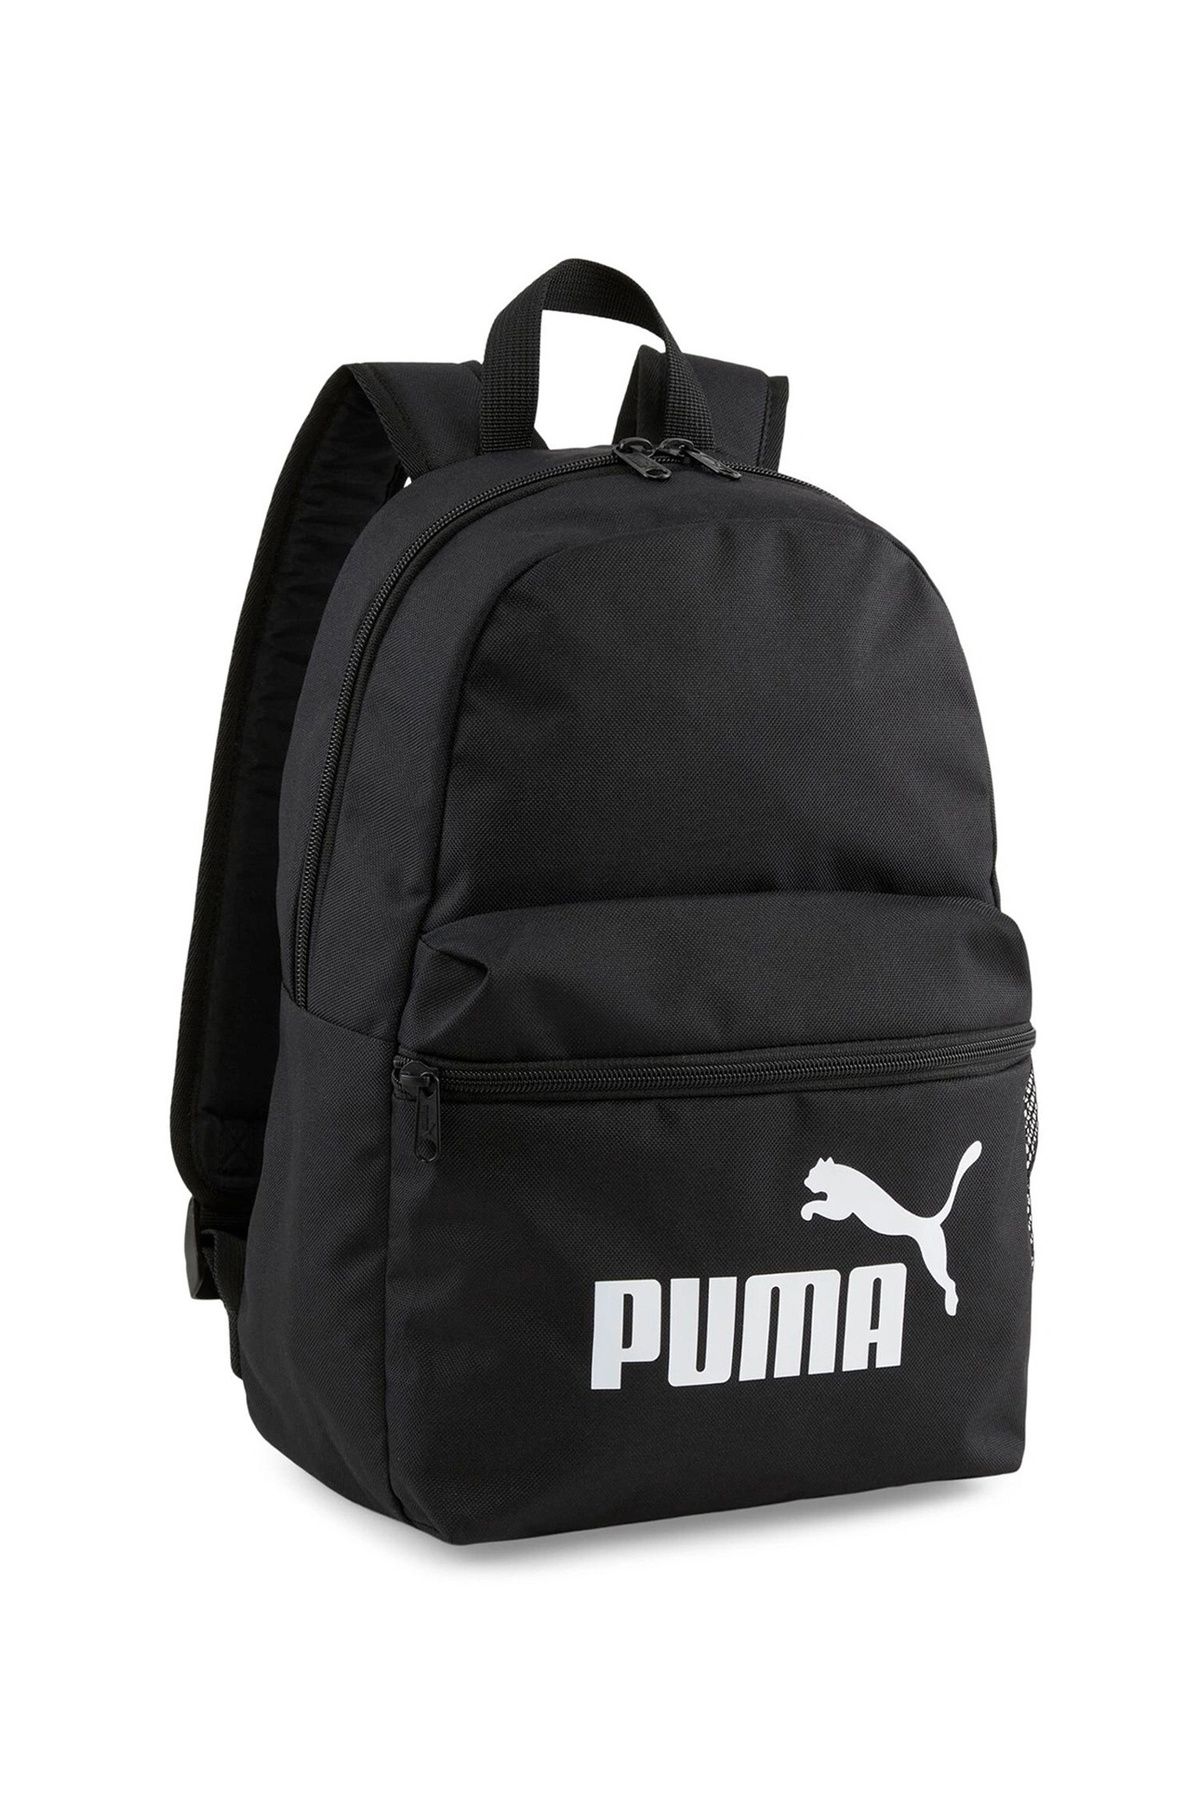 Puma سیاه - کوله پشتی کودکان سفید 7987901 کوچک PUMA